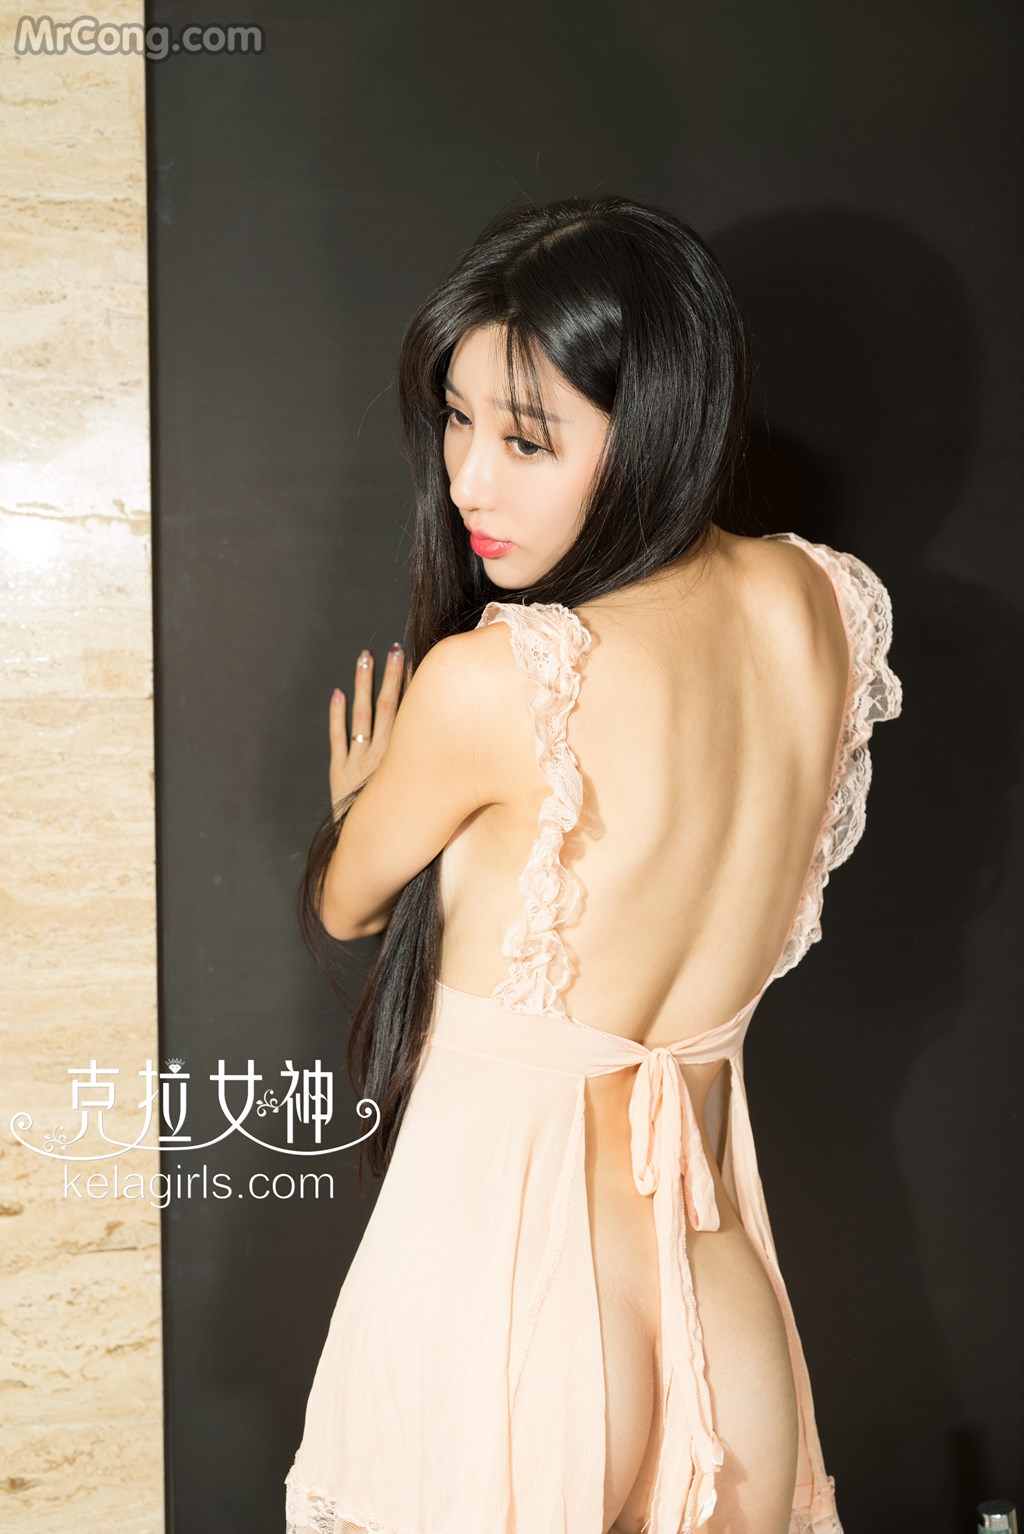 KelaGirls 2017-04-29: Model Wu Qian Qian (吴倩倩) (26 photos) photo 1-18